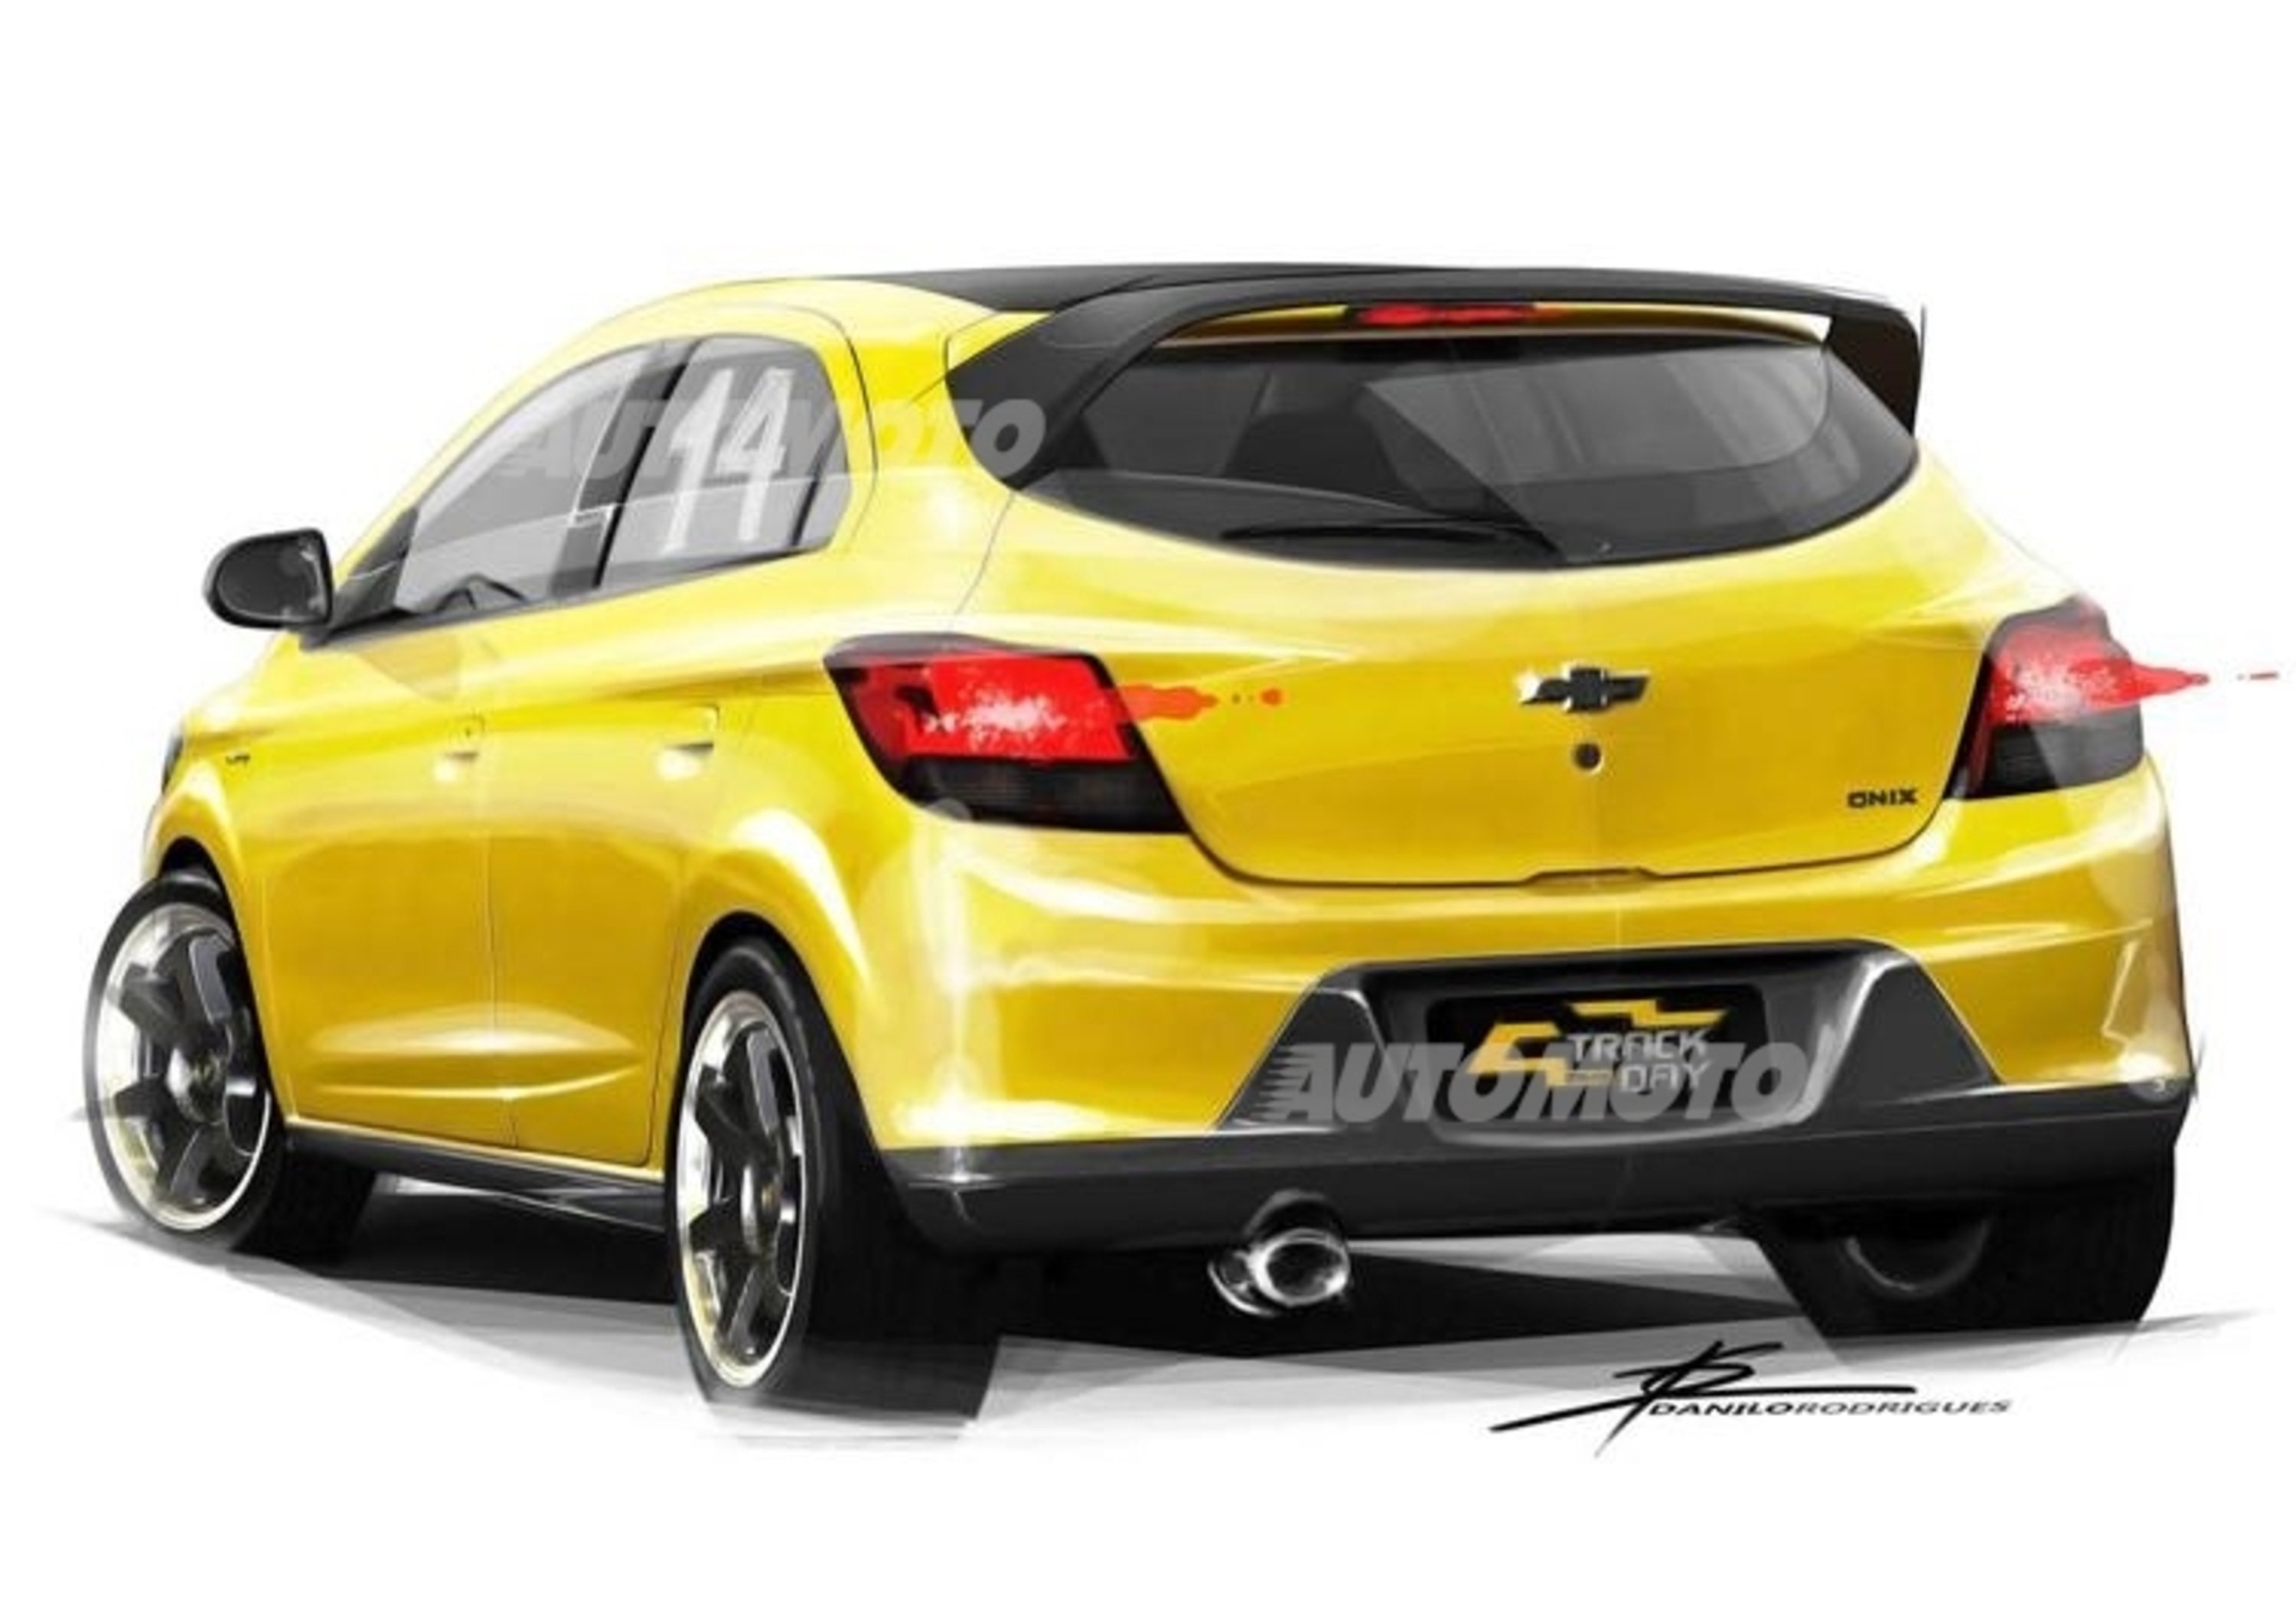 Chevrolet: quattro concept al San Paolo Motor Show 2014